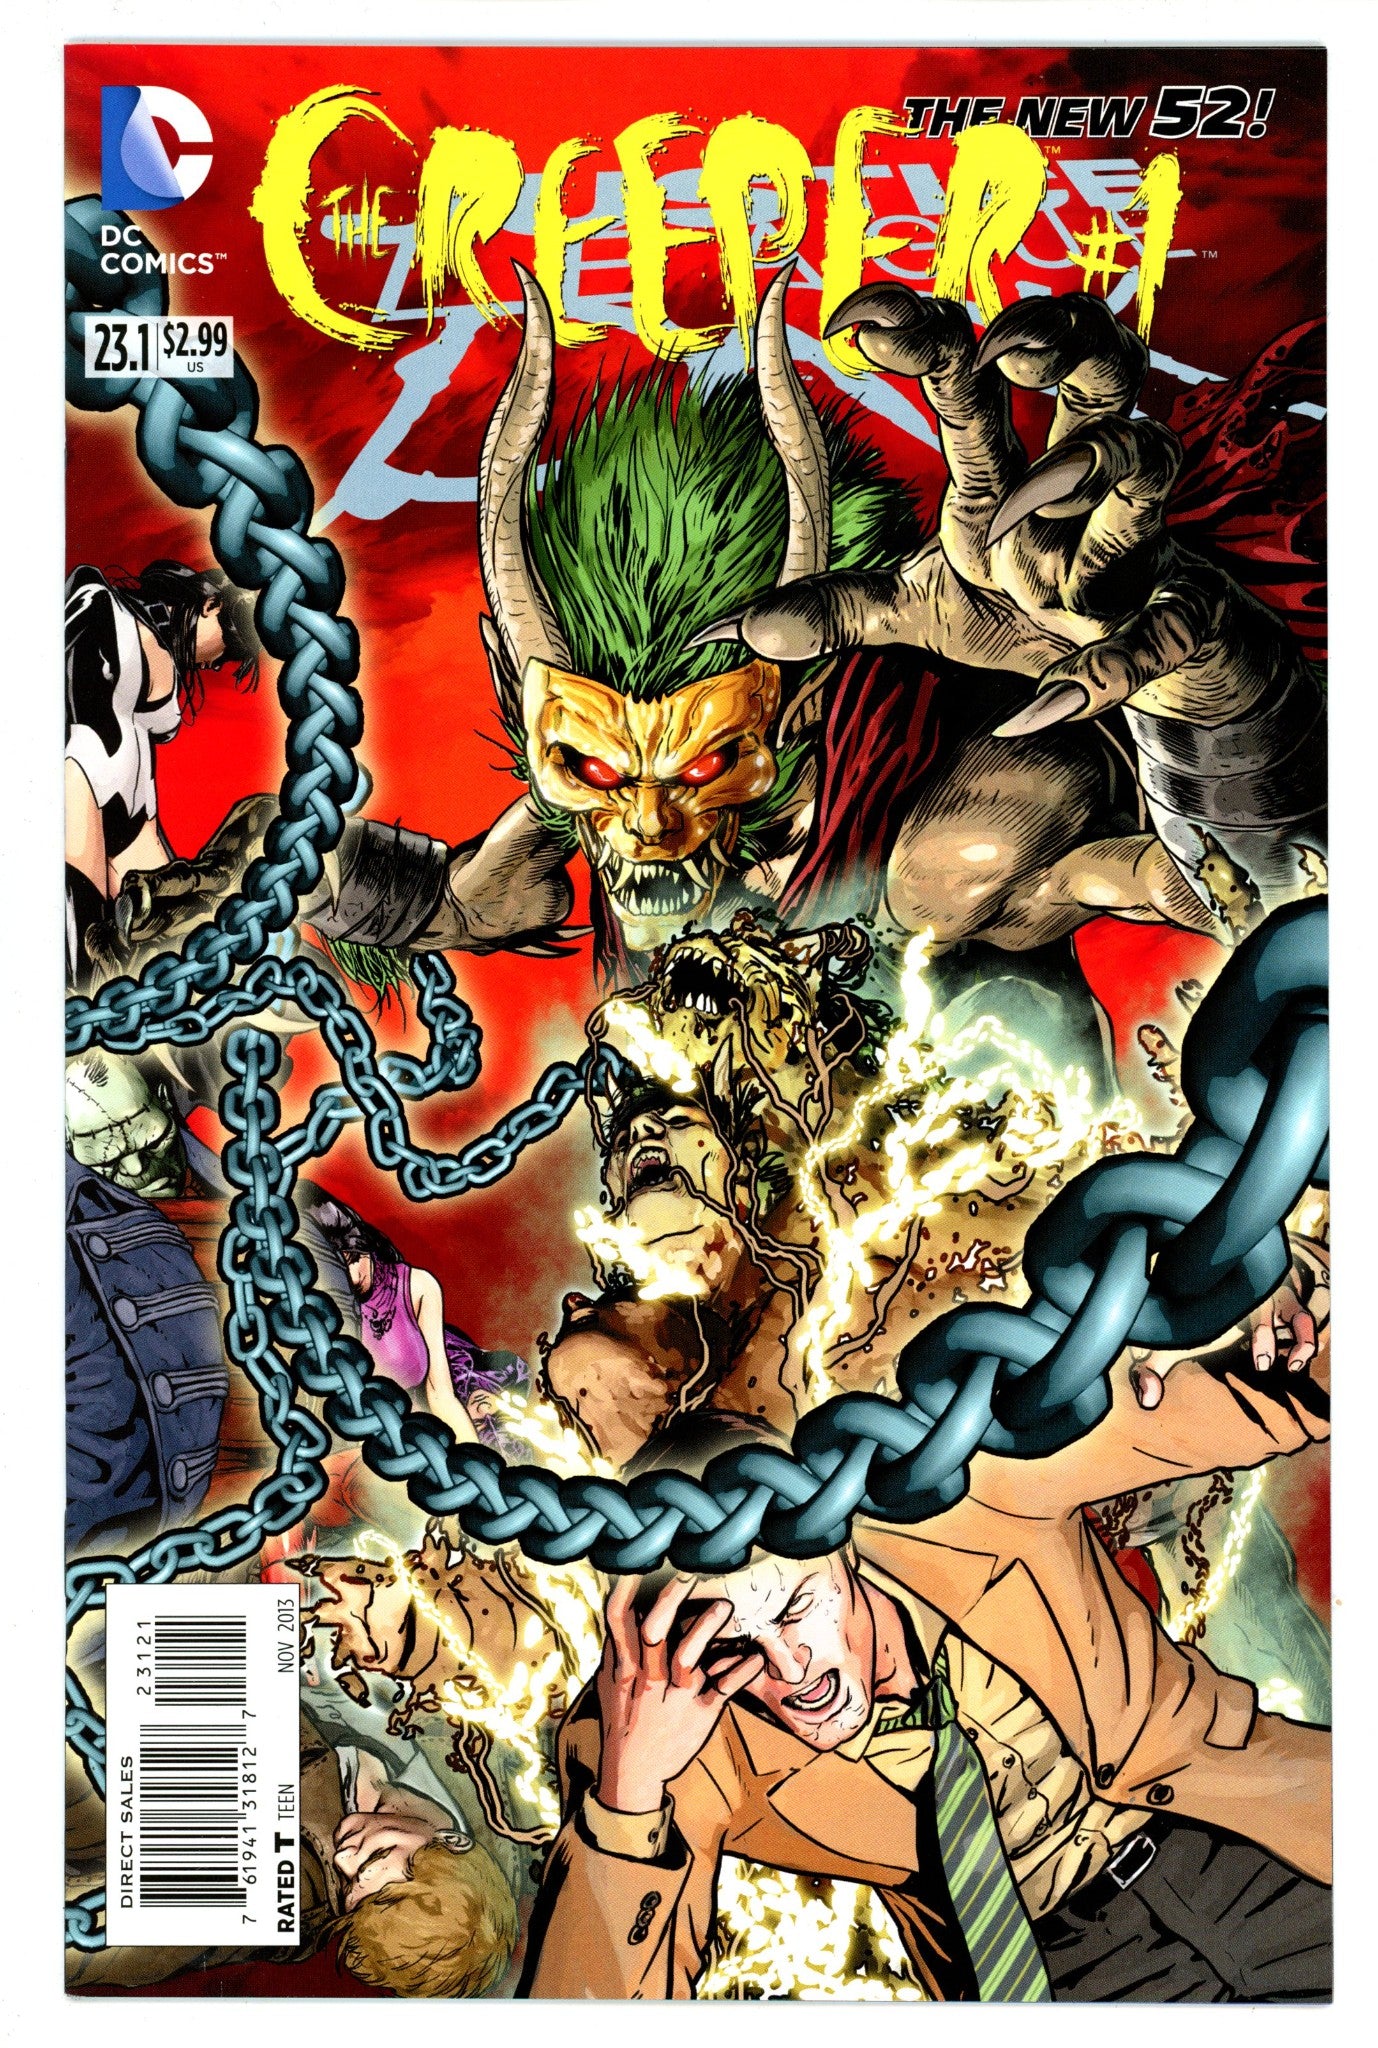 Justice League Dark Vol 1 23.1 High Grade (2013) Variant 